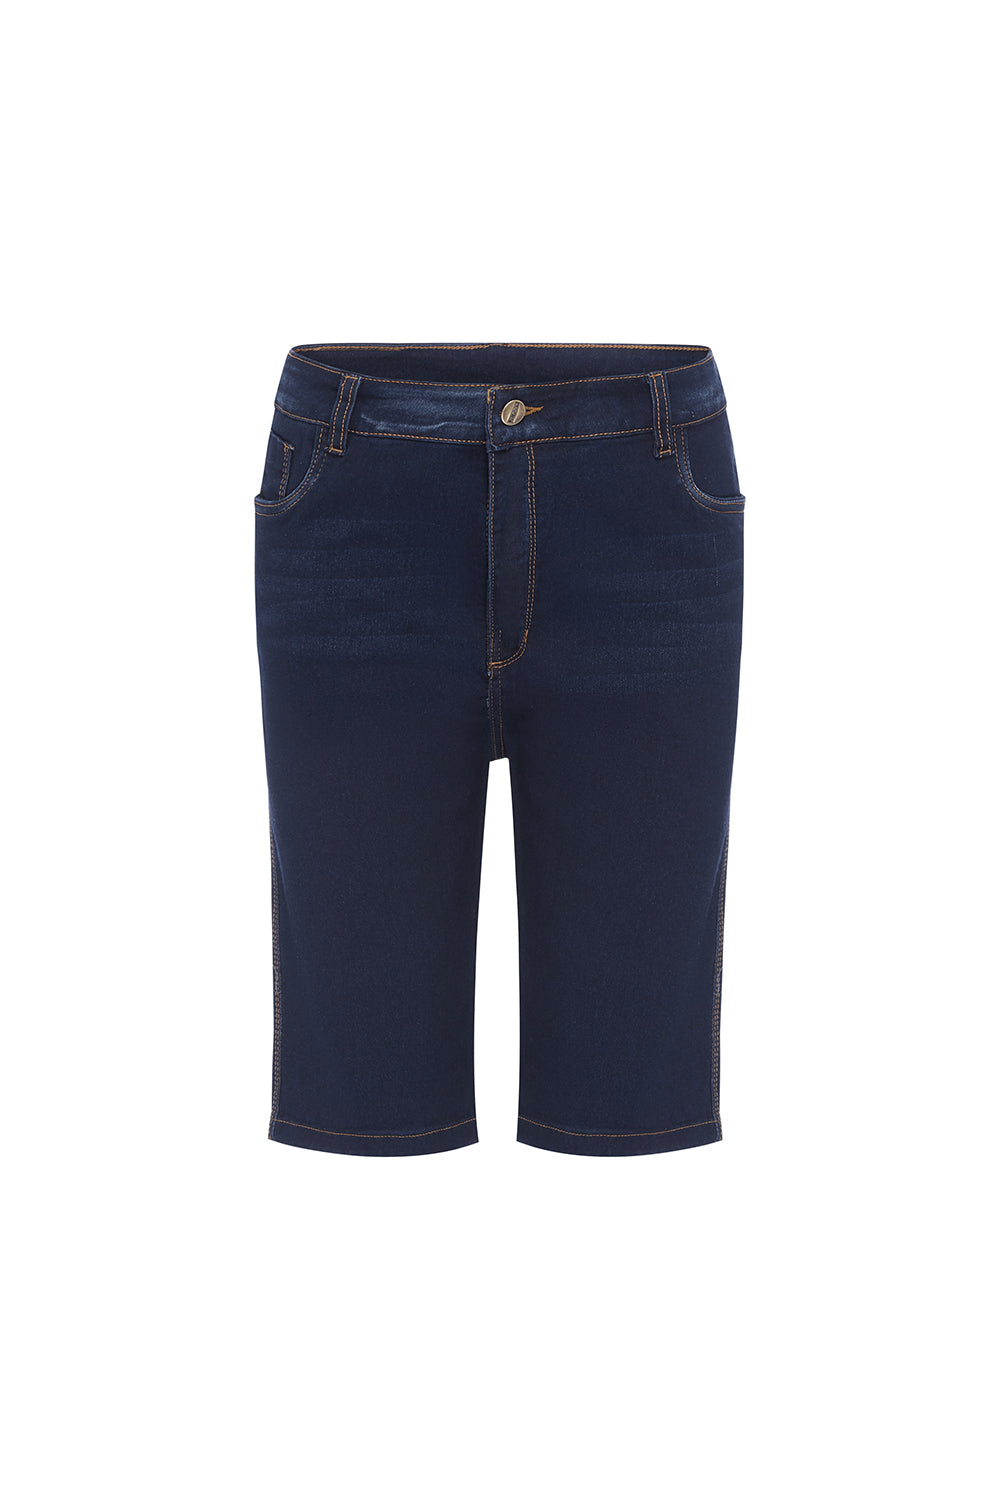 Amber Blue Denim Shorts Pants